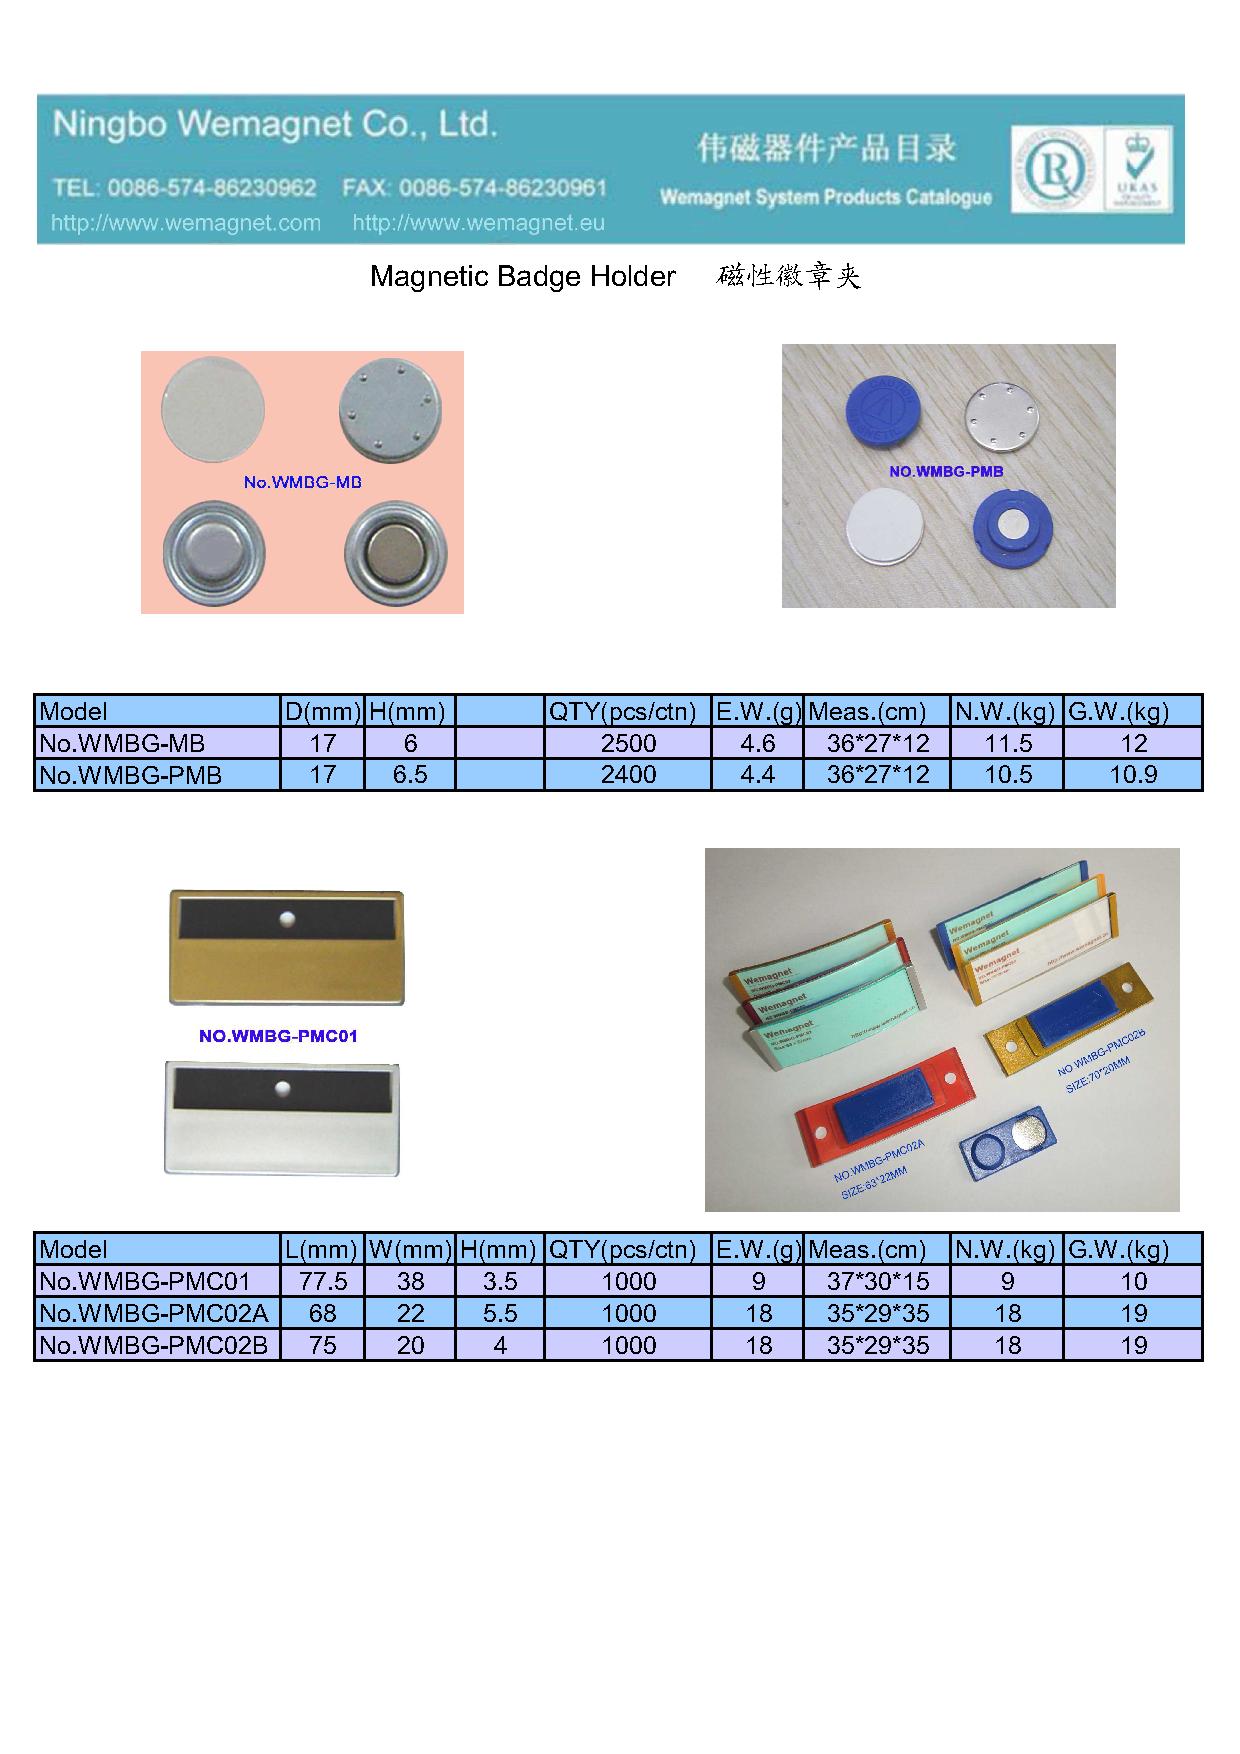 Magnetic badge holders02